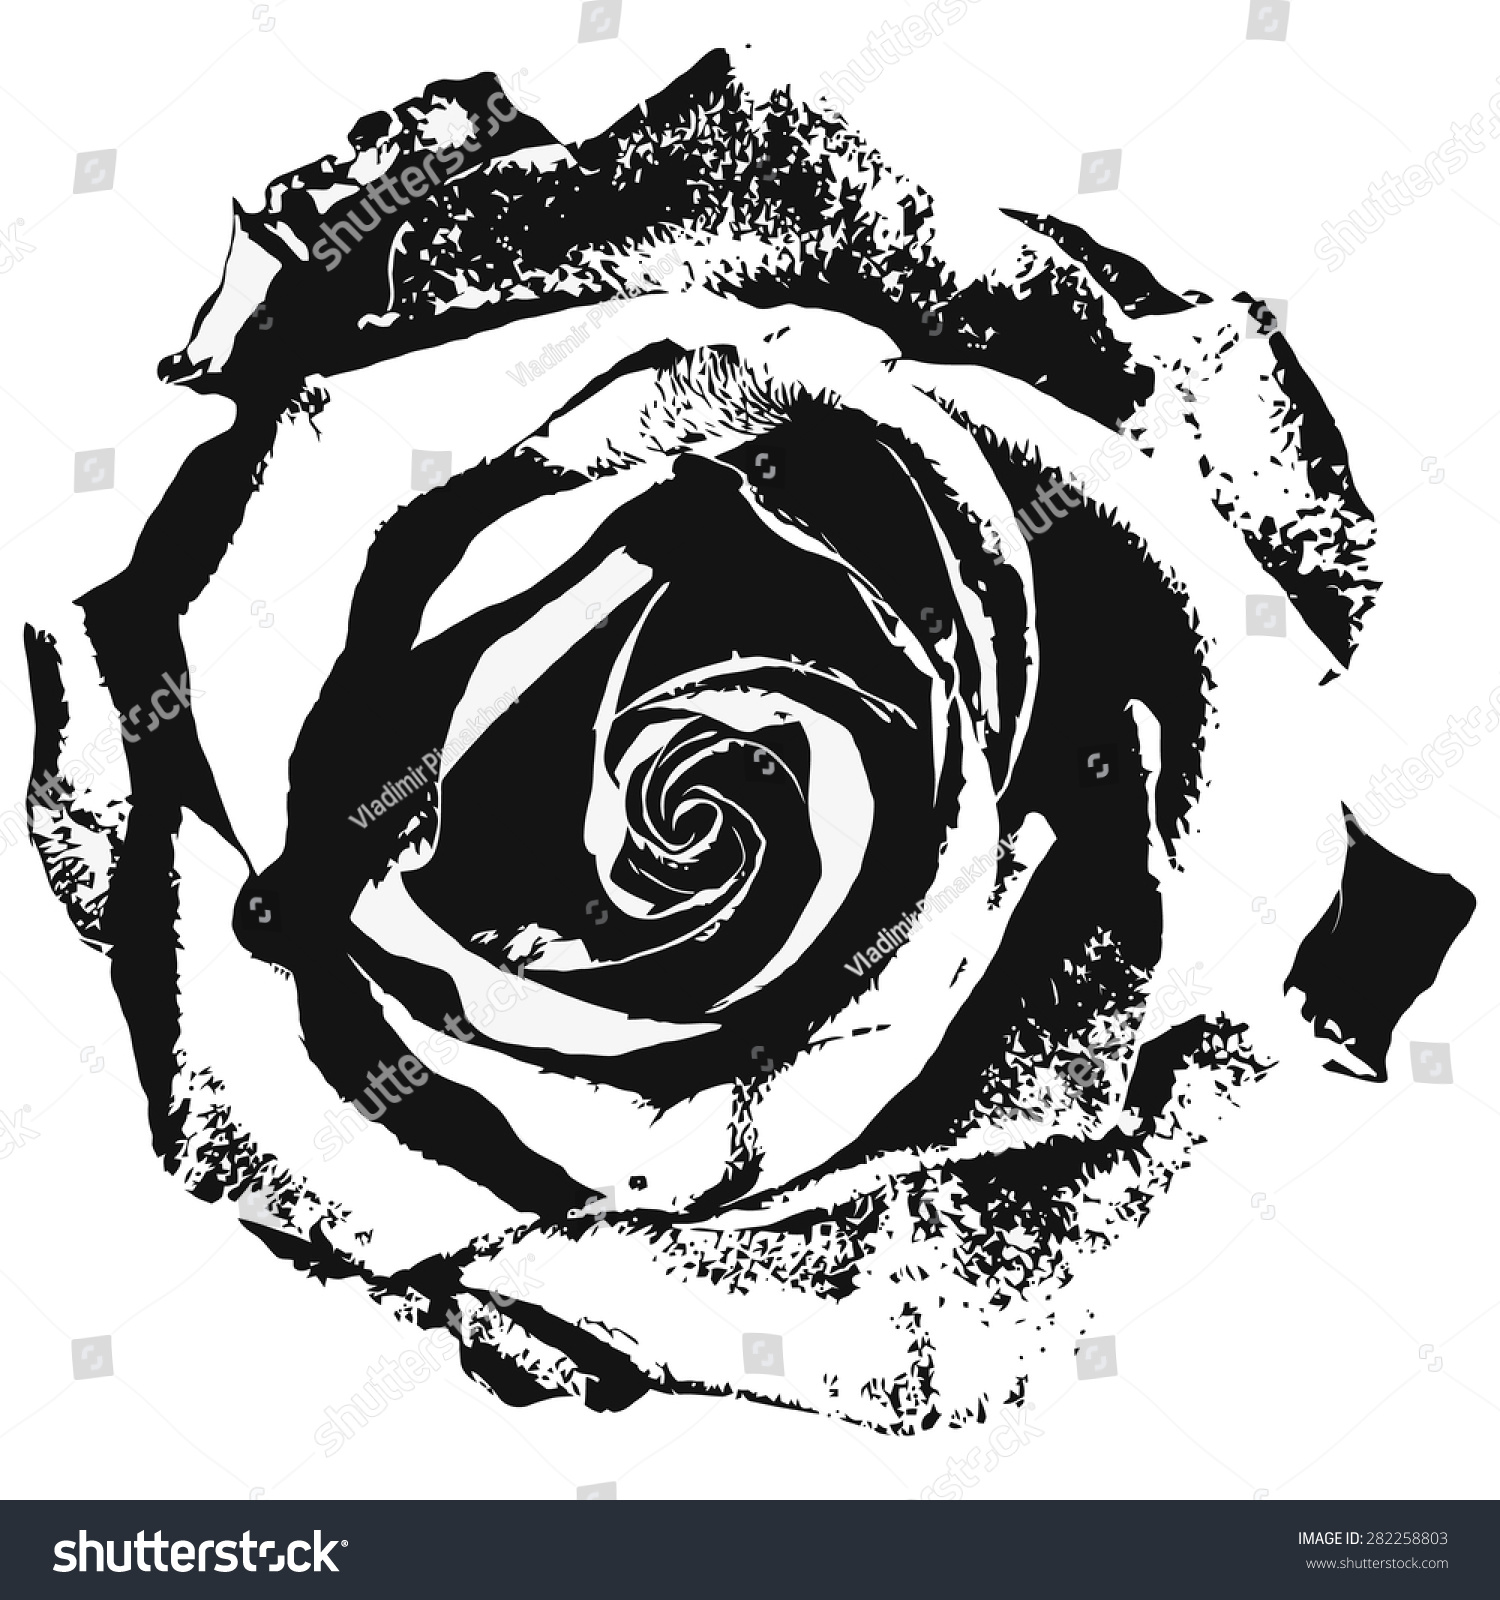 Black Silhouette Rose Vector Illustration Vetor Stock Livre De Direitos 282258803 6326